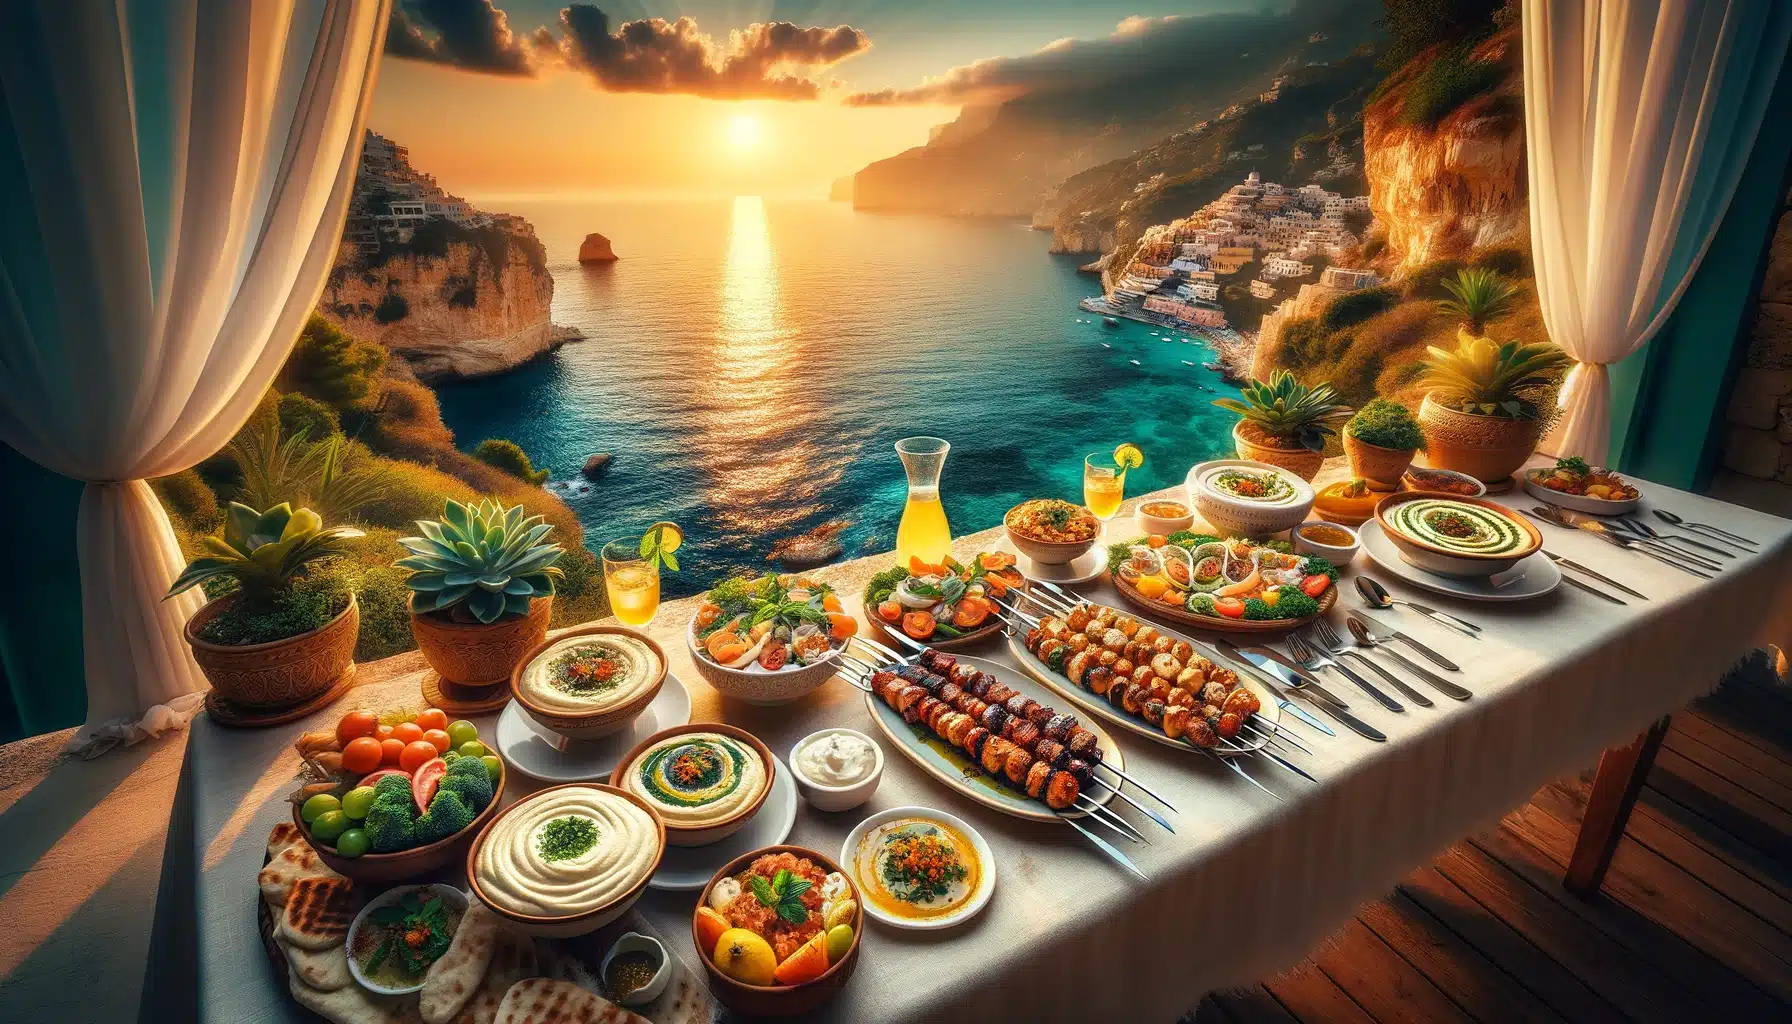 Key Components of the Mediterranean Diet